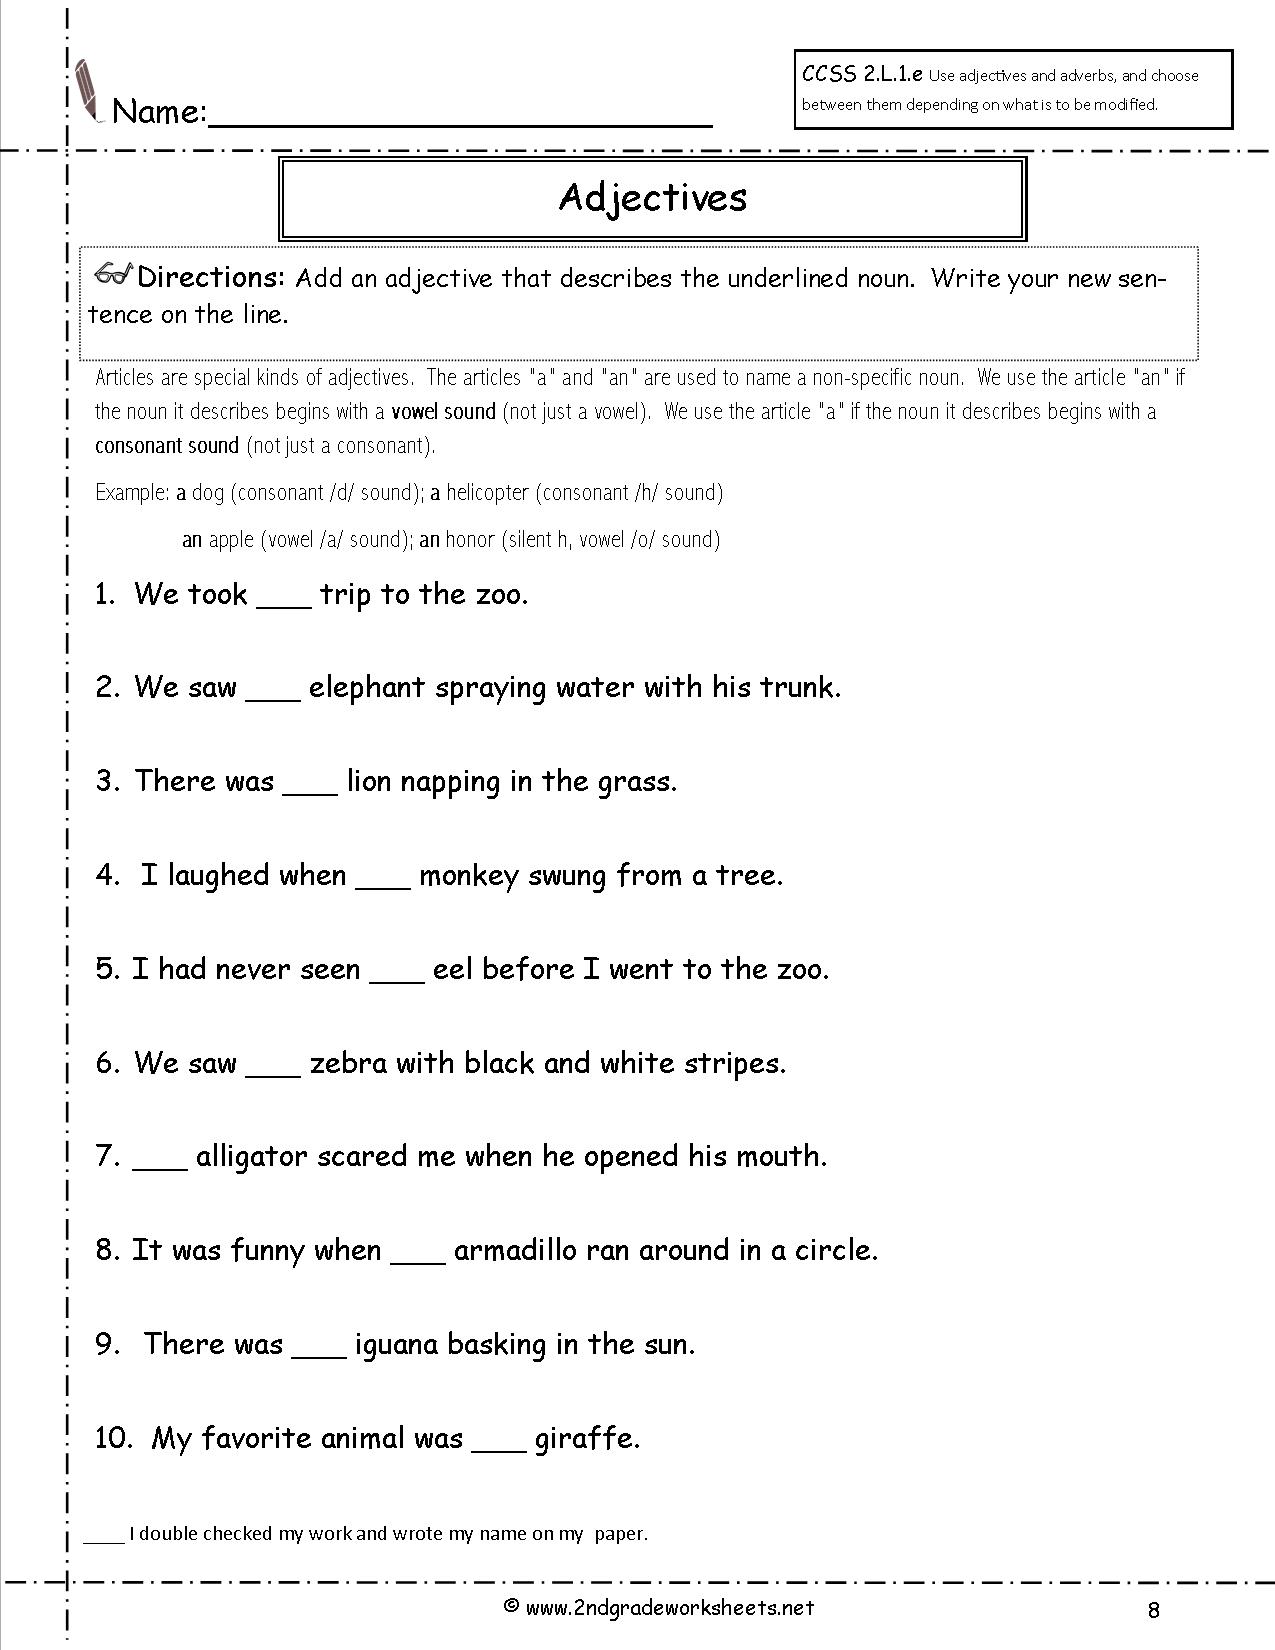 15 Best Images Of Noun Pronoun Verb Adjective Adverb Worksheet Adverbs And Adjectives